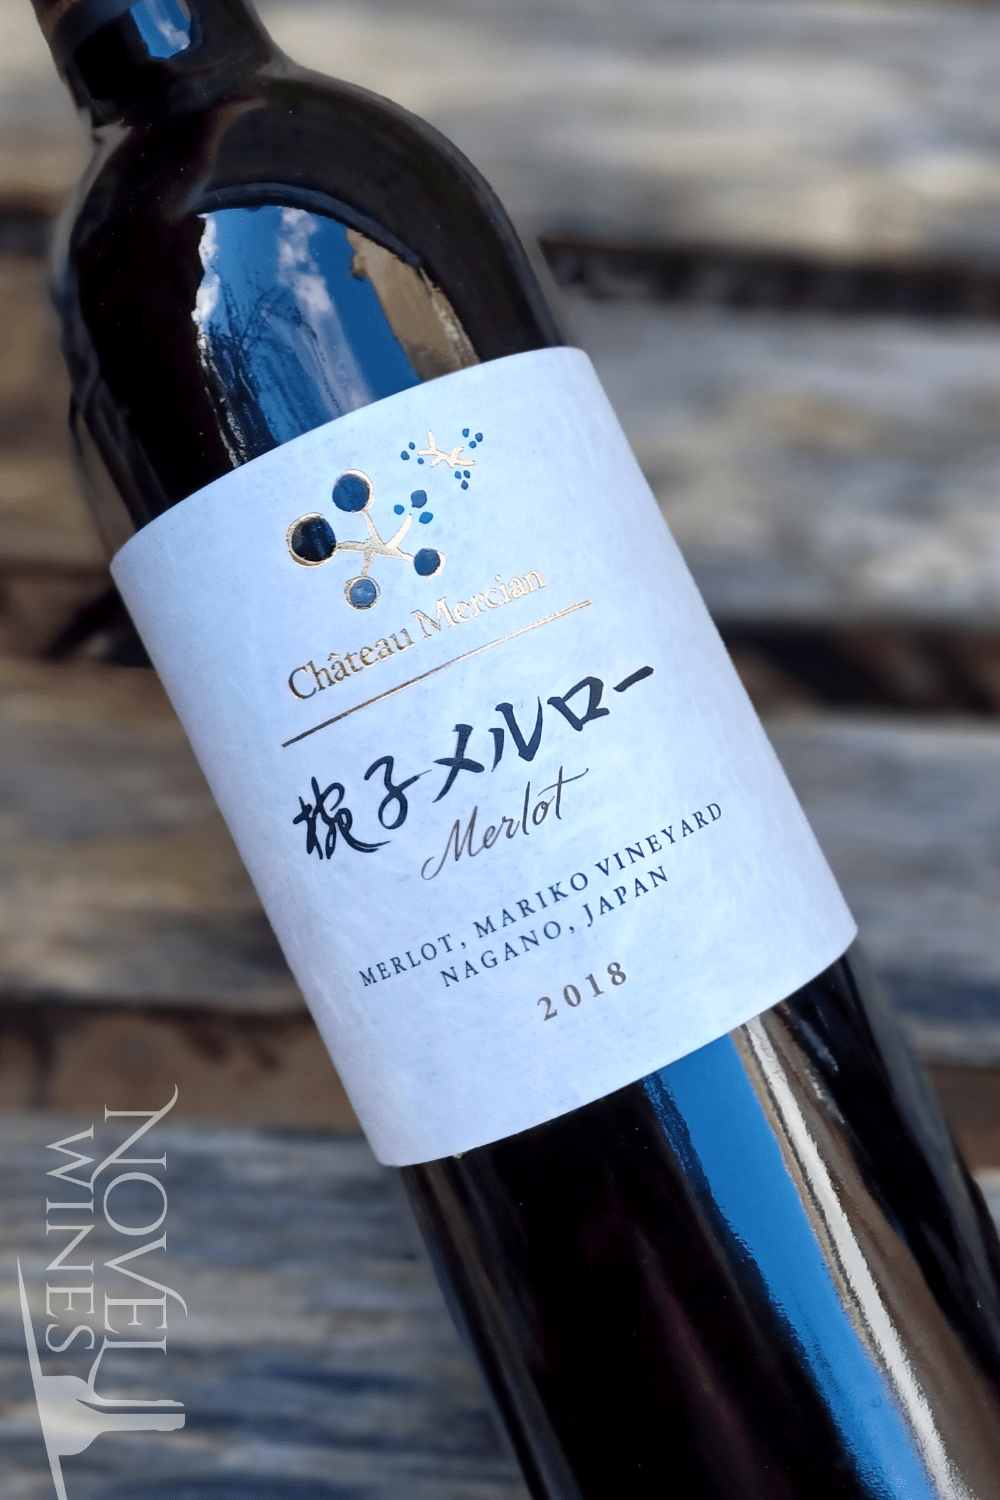 Novel Wines White Wine Chateau Mercian Merlot Mariko 2018, Japan